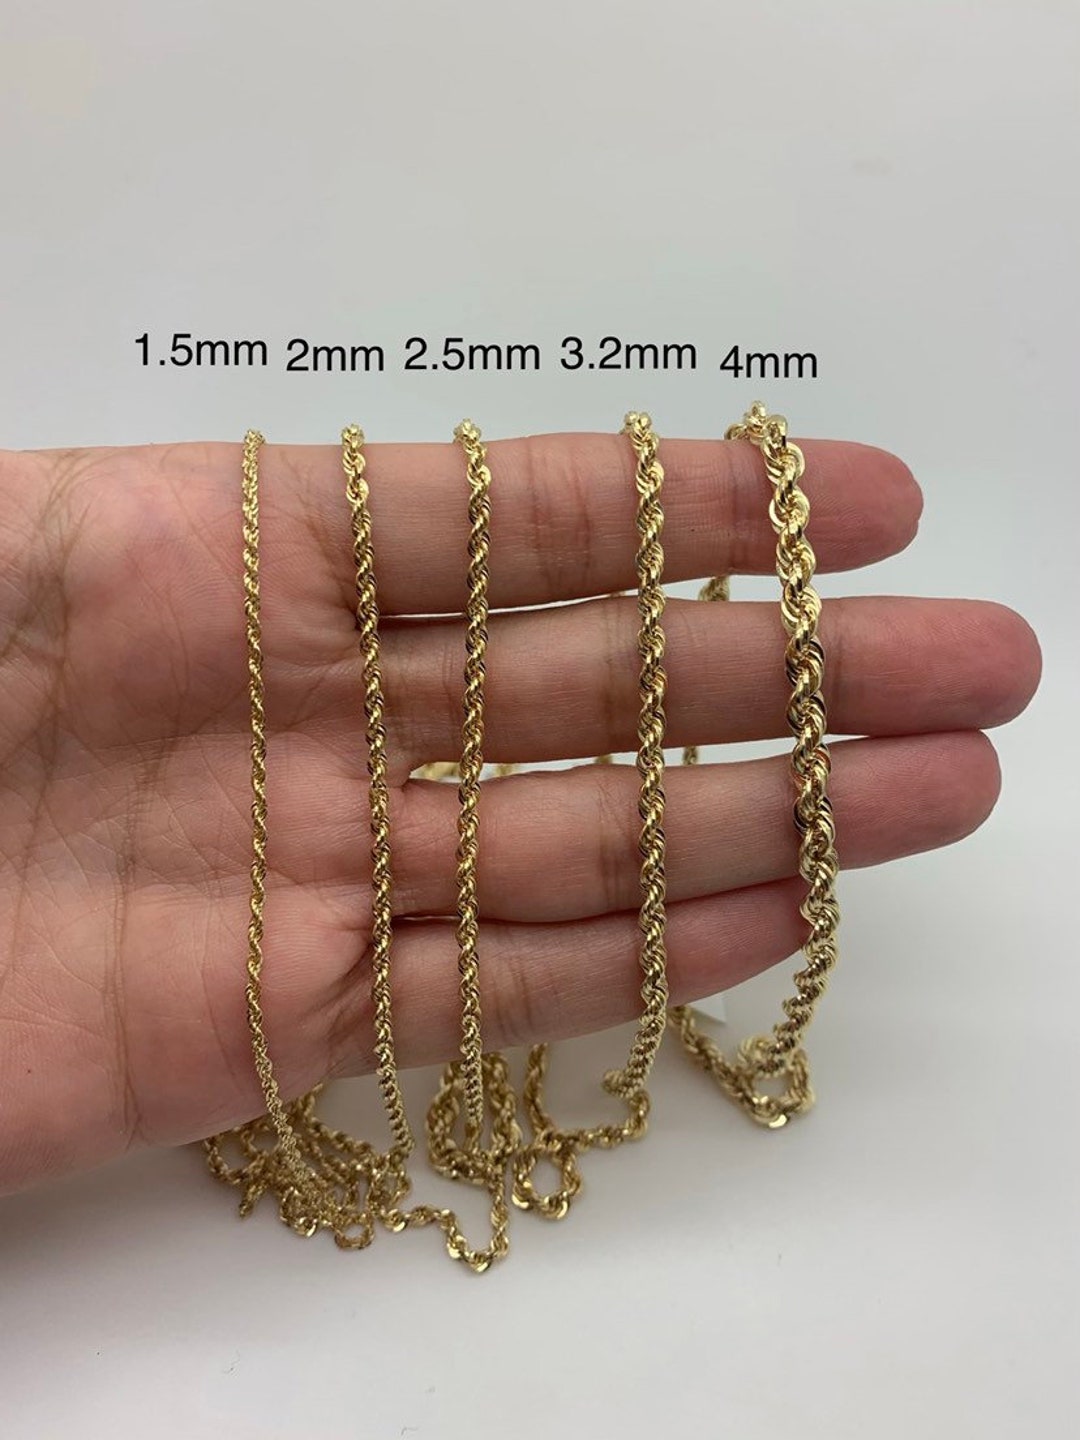 Gold Rope Chain - Genuine Italian Gold | Lirys Jewelry 10kt / 4.7mm / 18